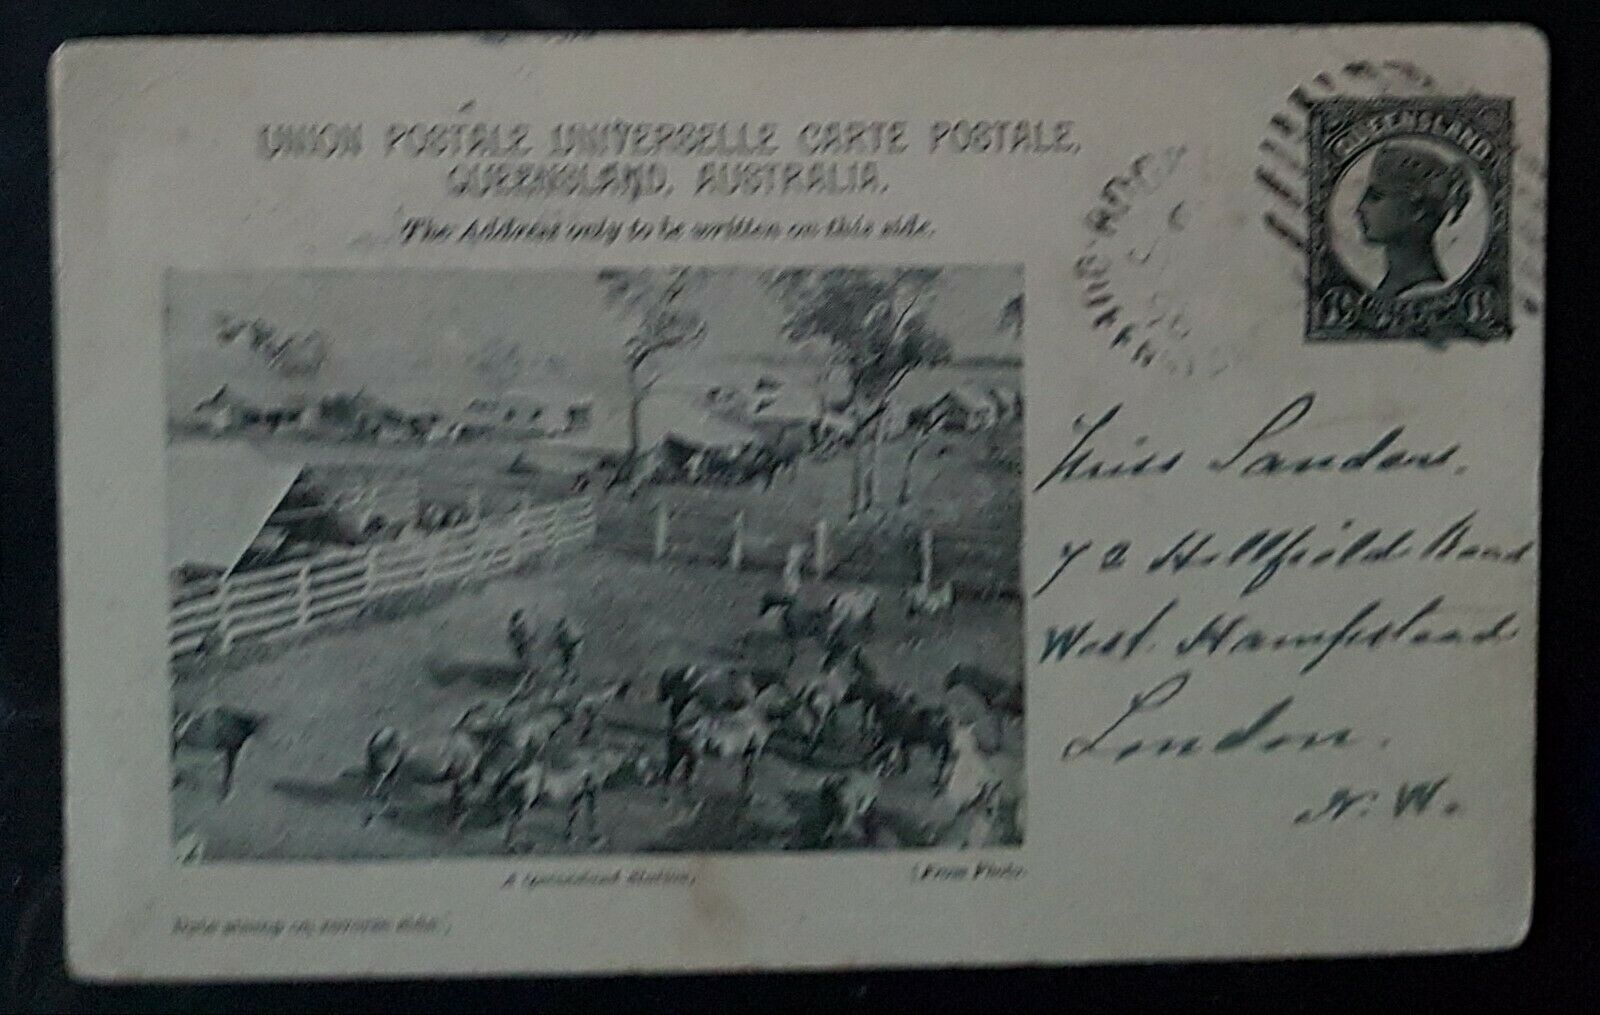 Queensland Post Card, 1½d a Queensland Station HG 11 used